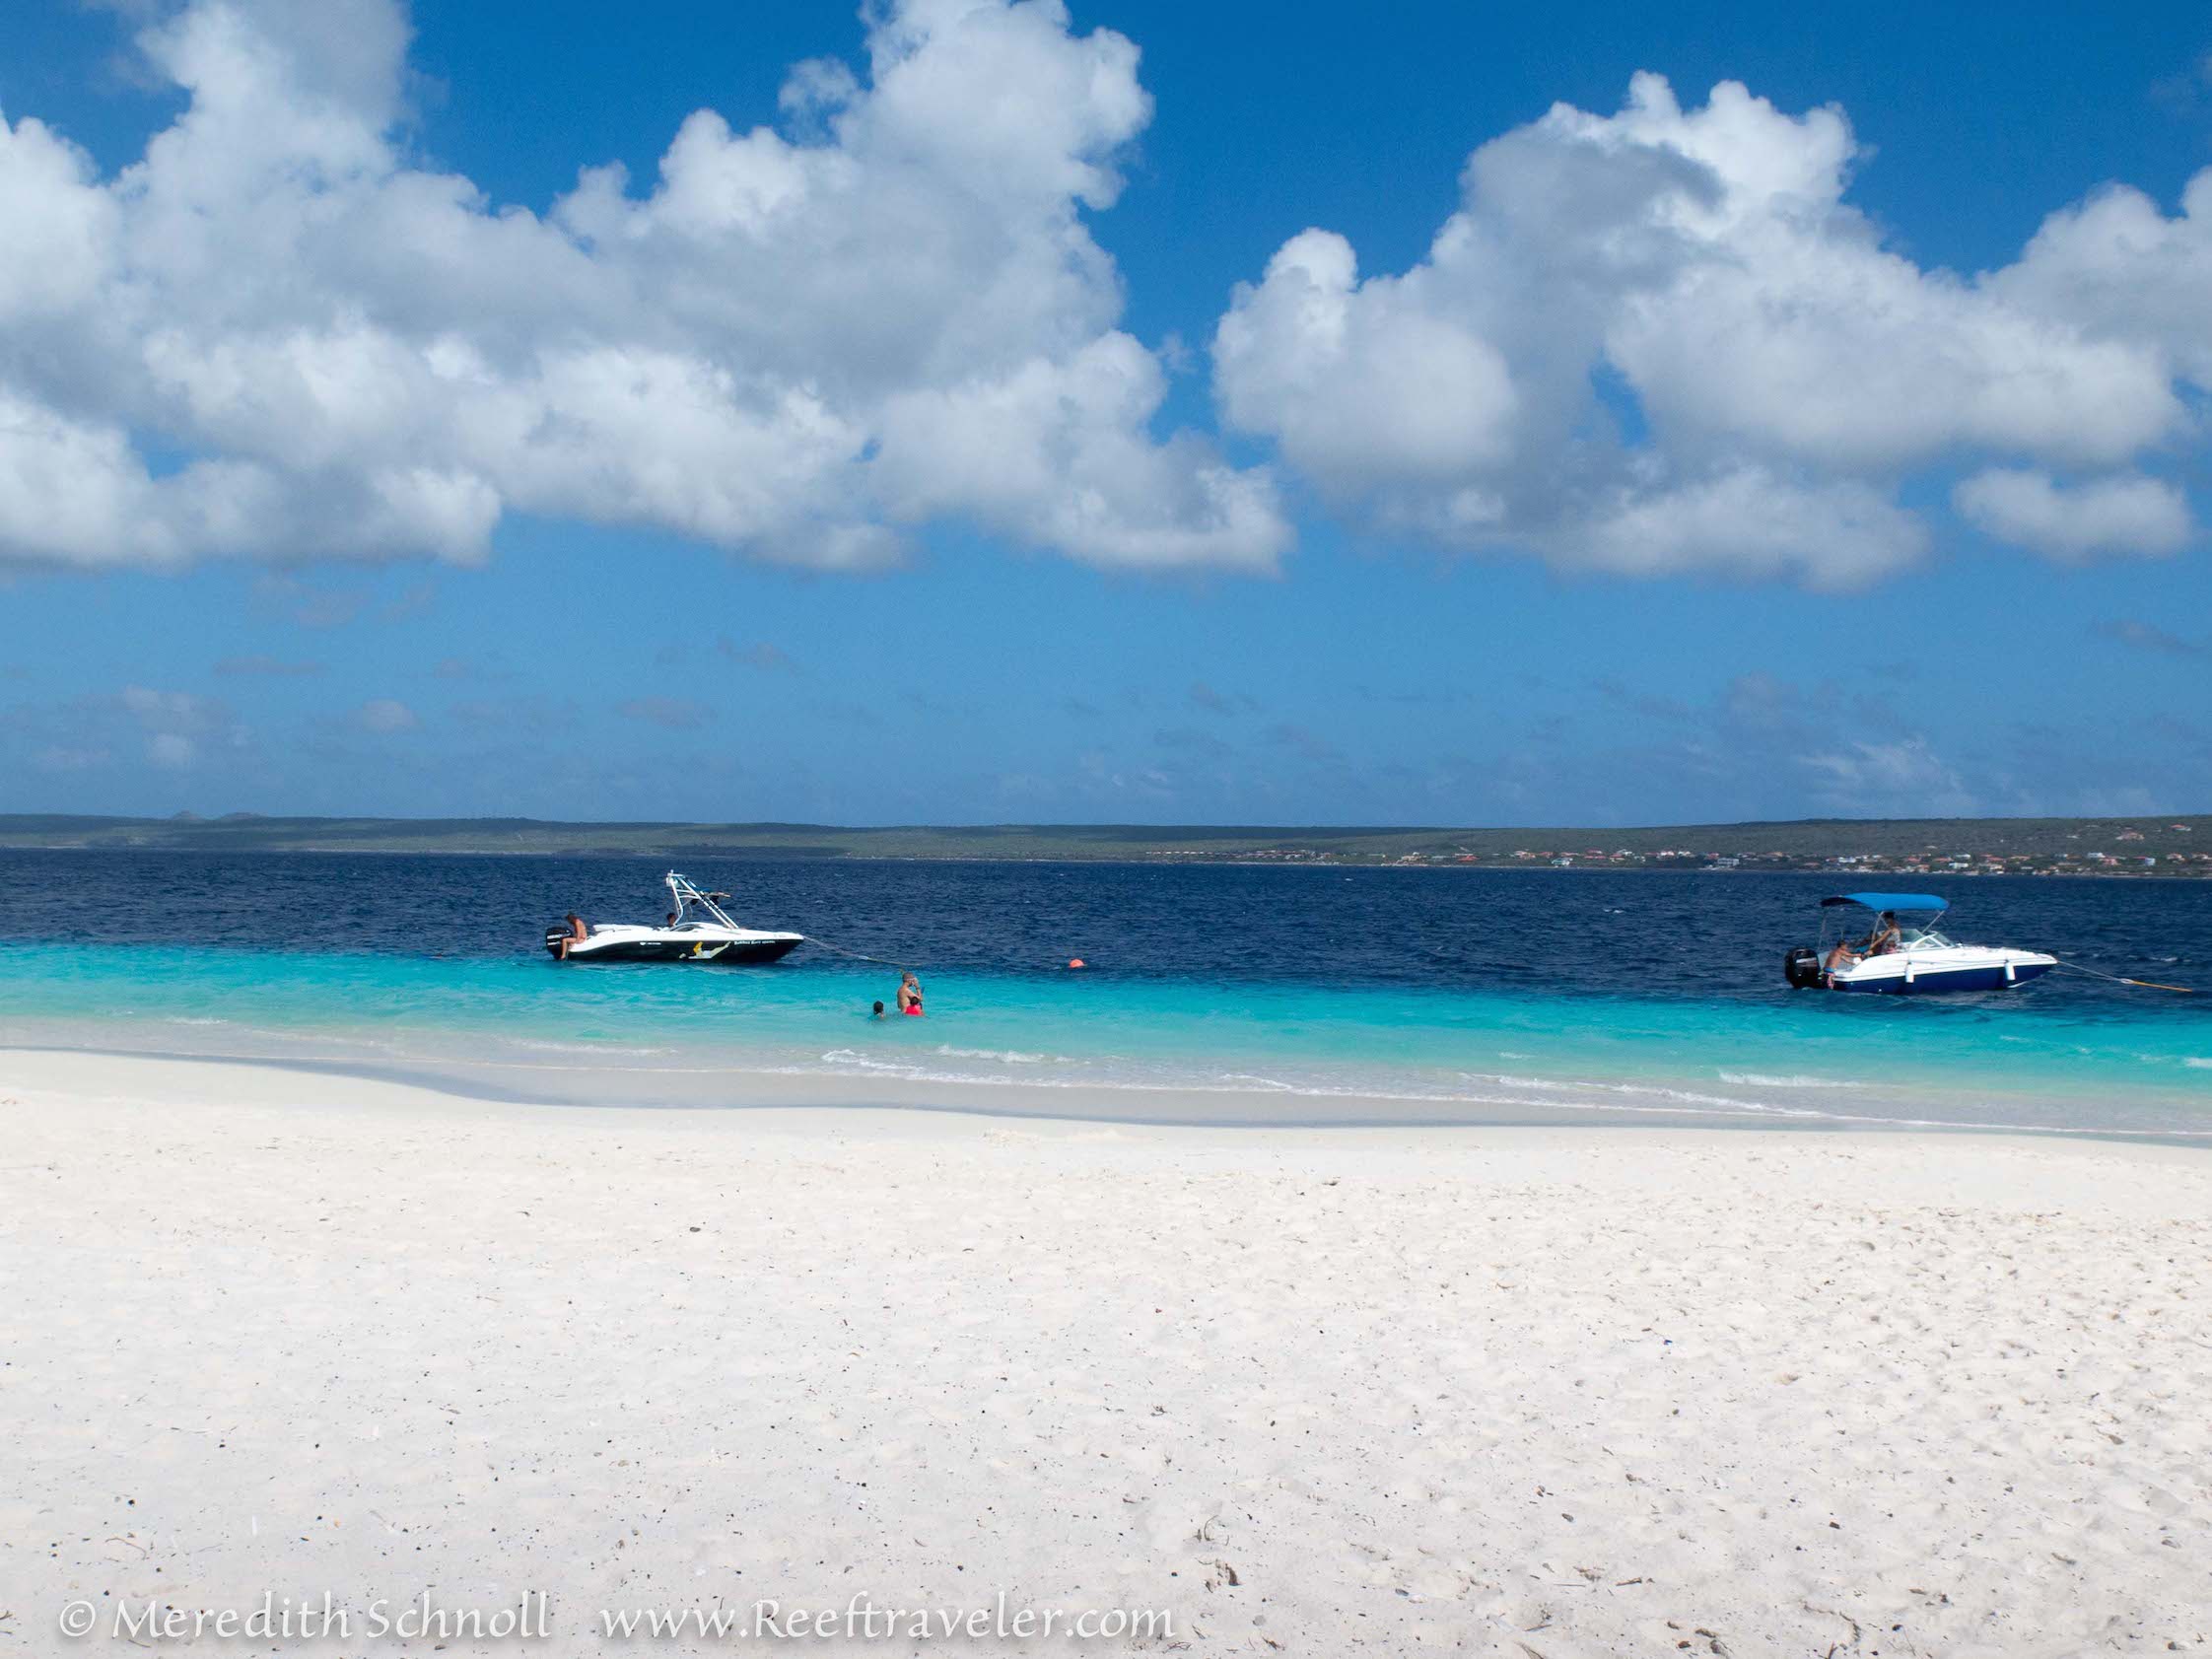 Reforesting Klein Bonaire | Reeftraveler